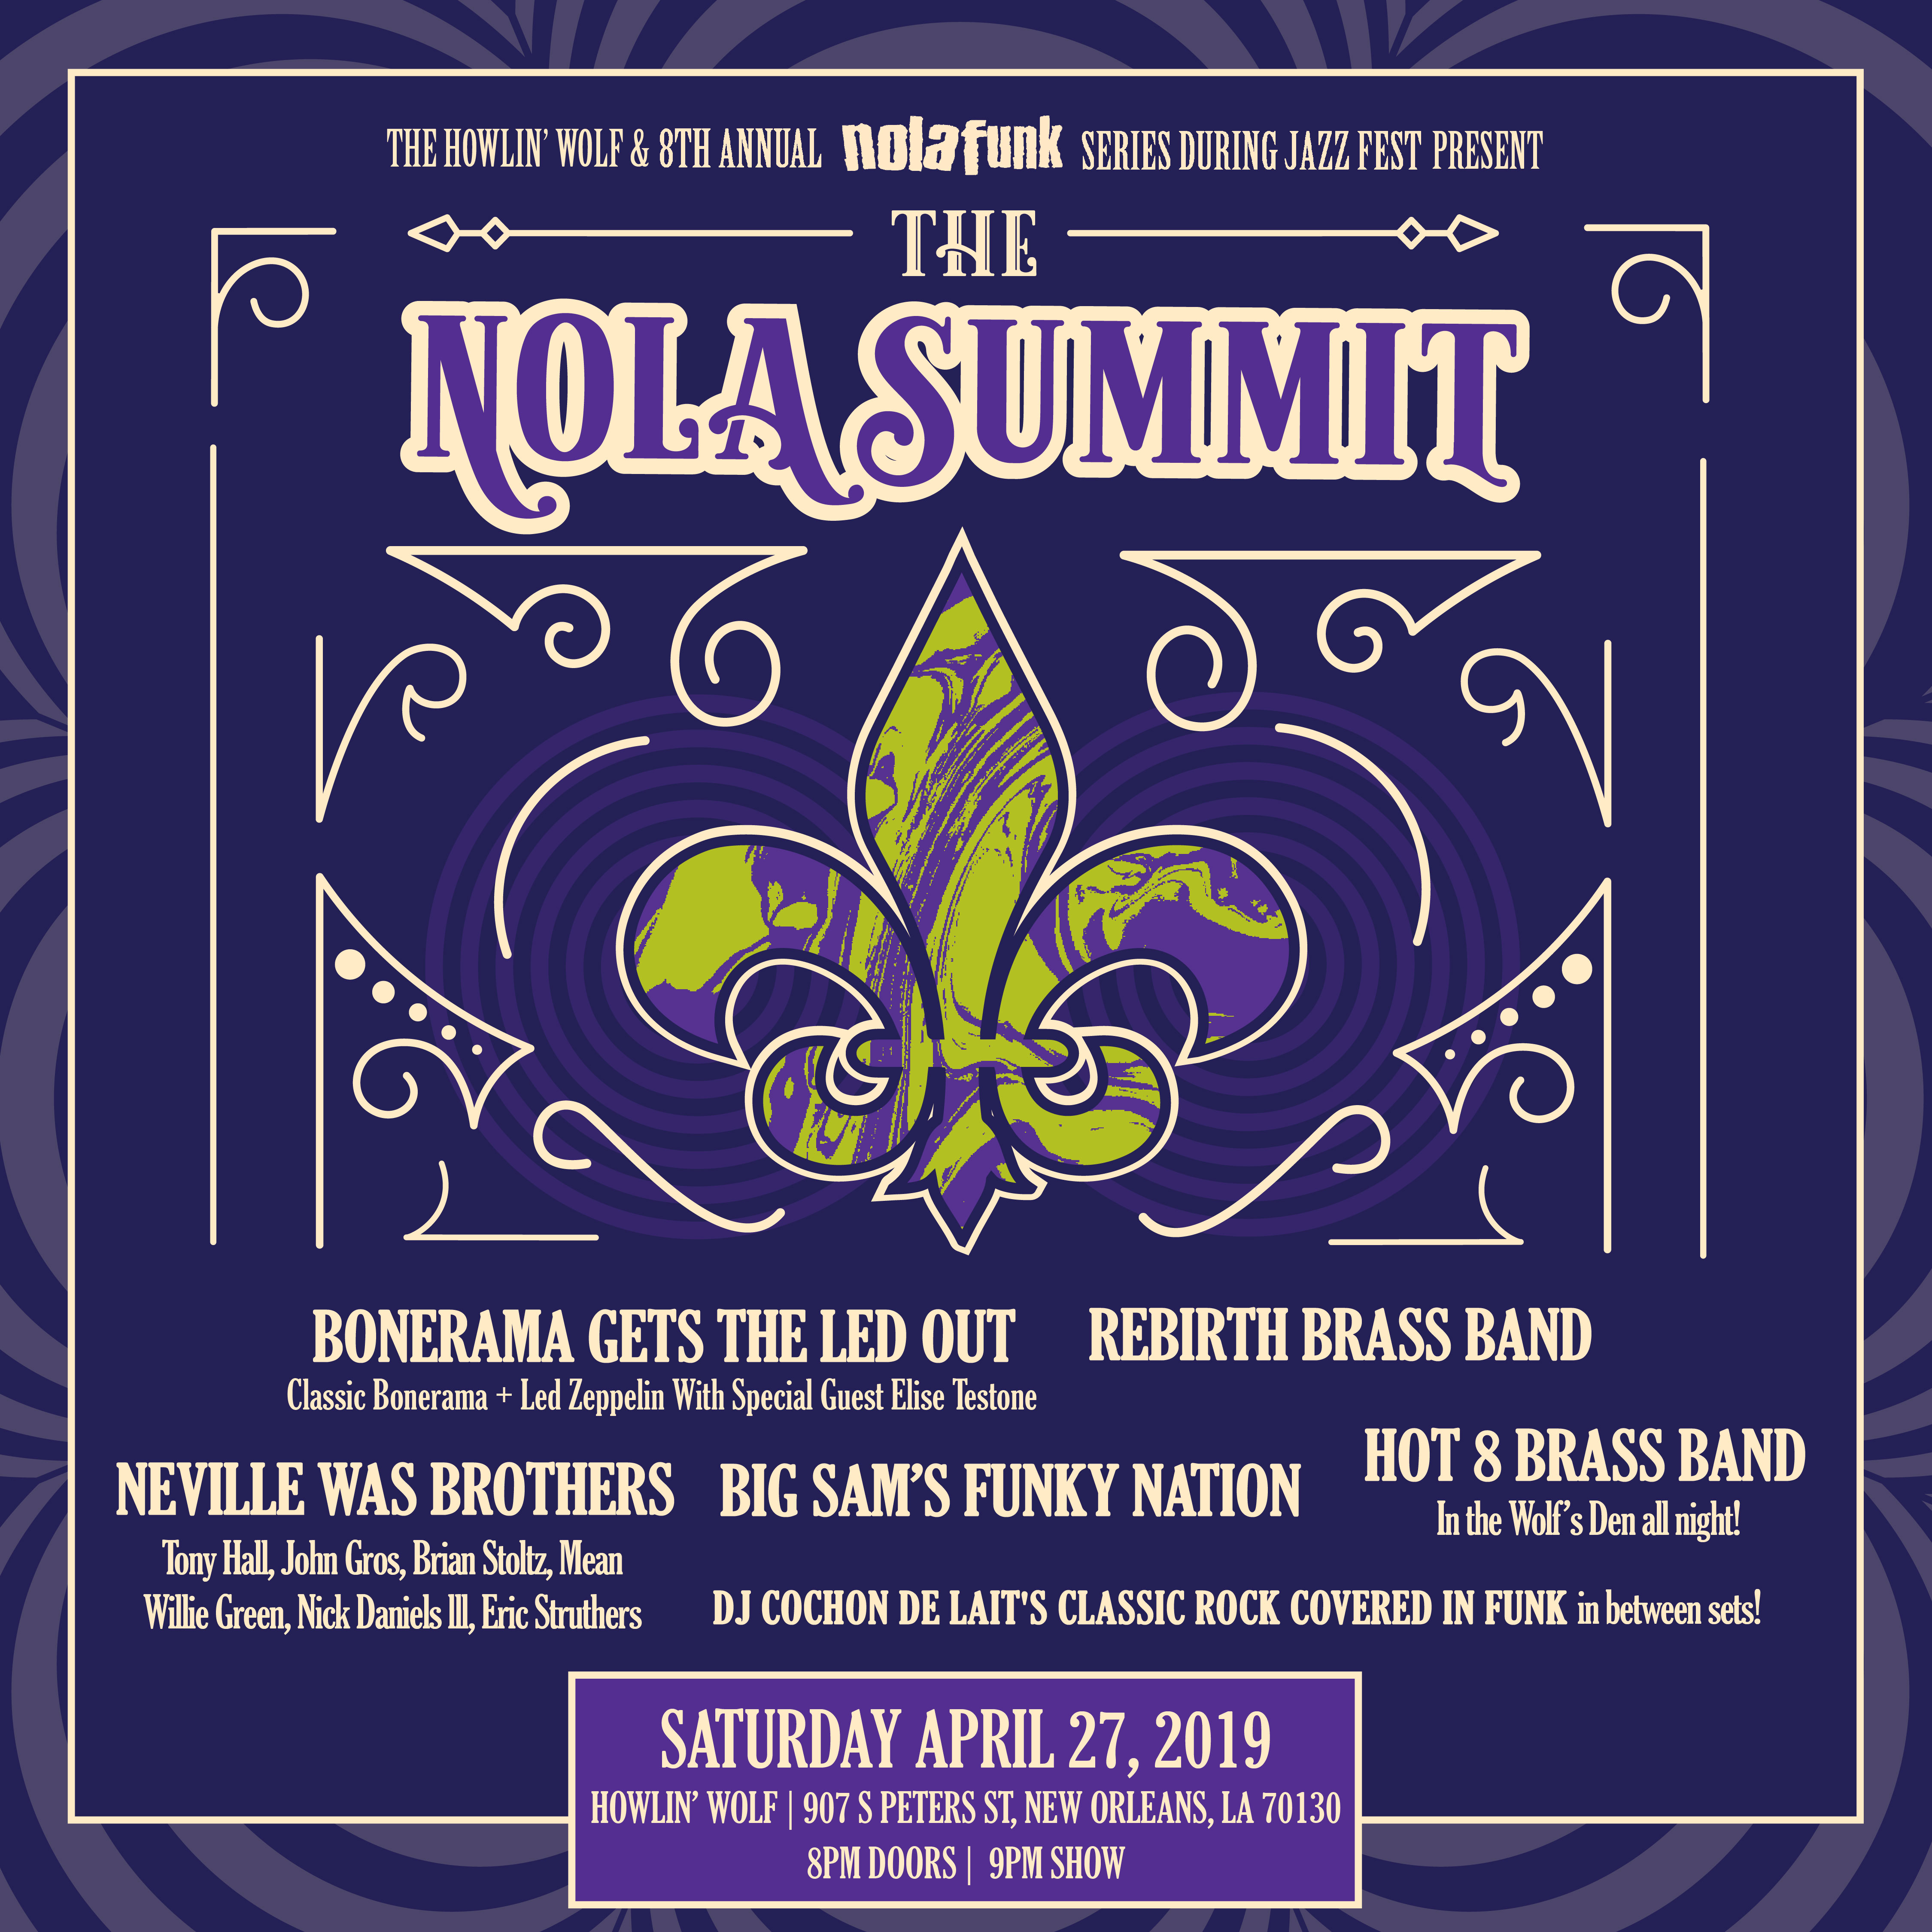 Bonerama Rebirth Brass Band And More To Play Nola Summit At Jazz Fest